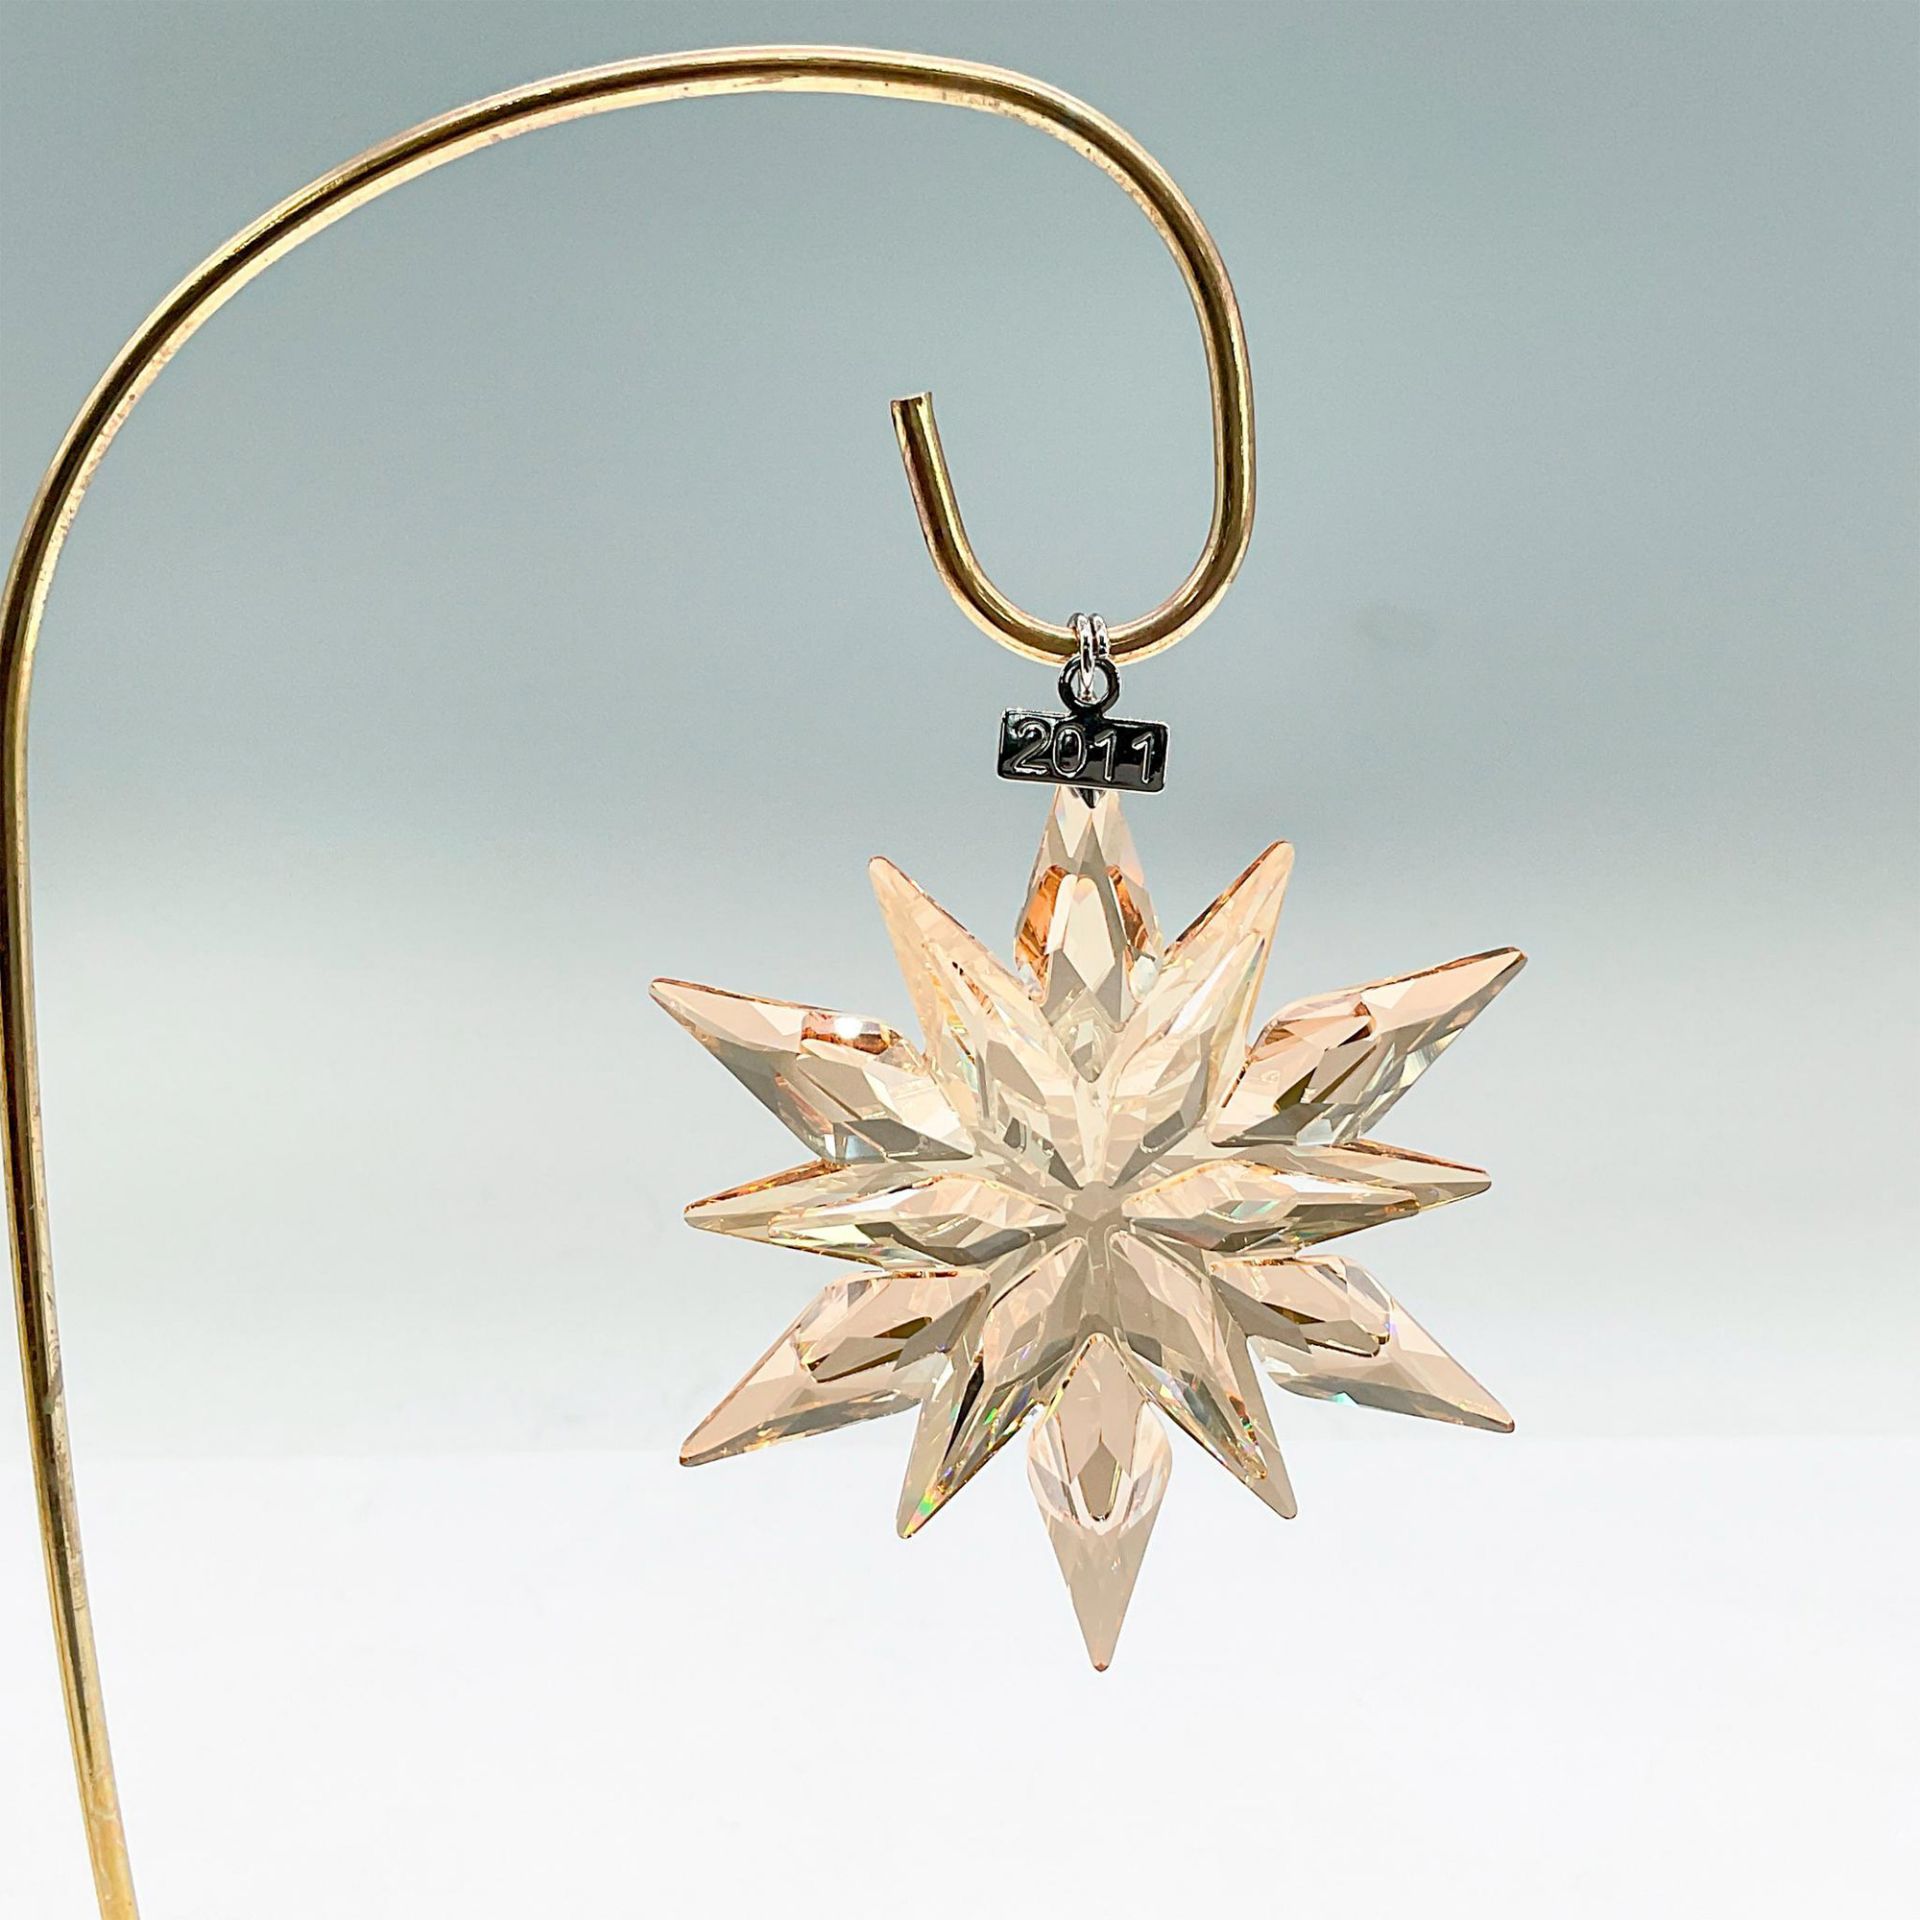 Swarovski Crystal SCS Gold Christmas Ornament 2011